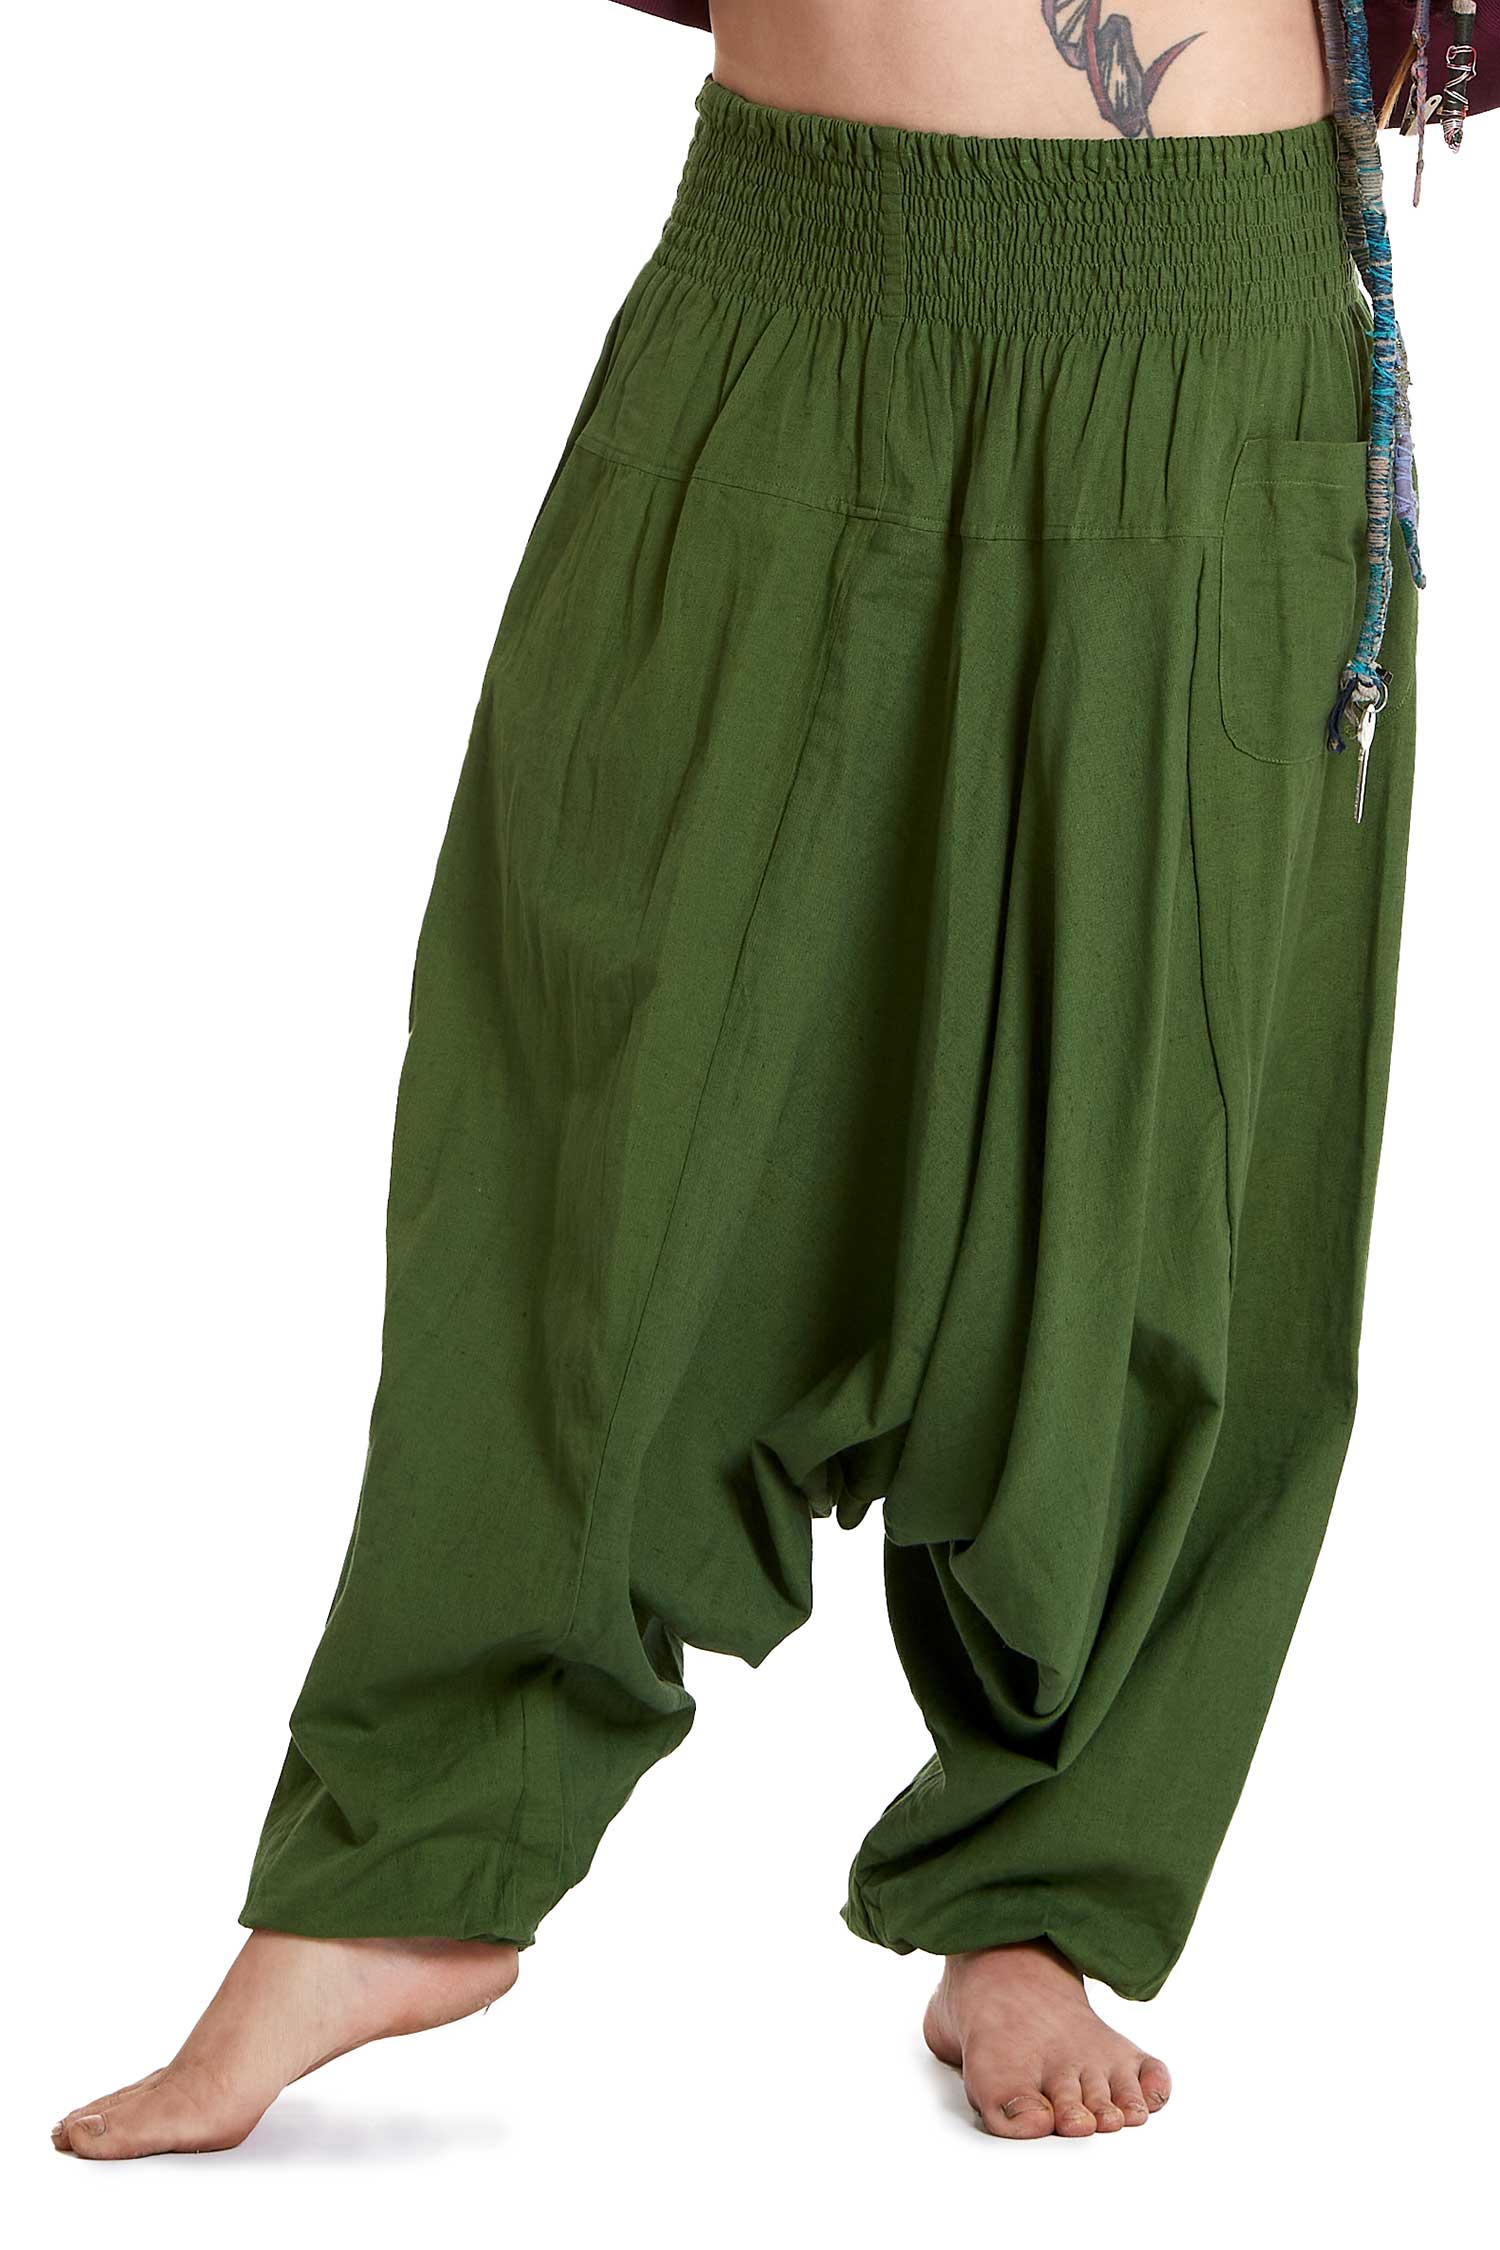 Ali Baba Pants, harem trousers, hippy festival Goa pants | Altshop UK